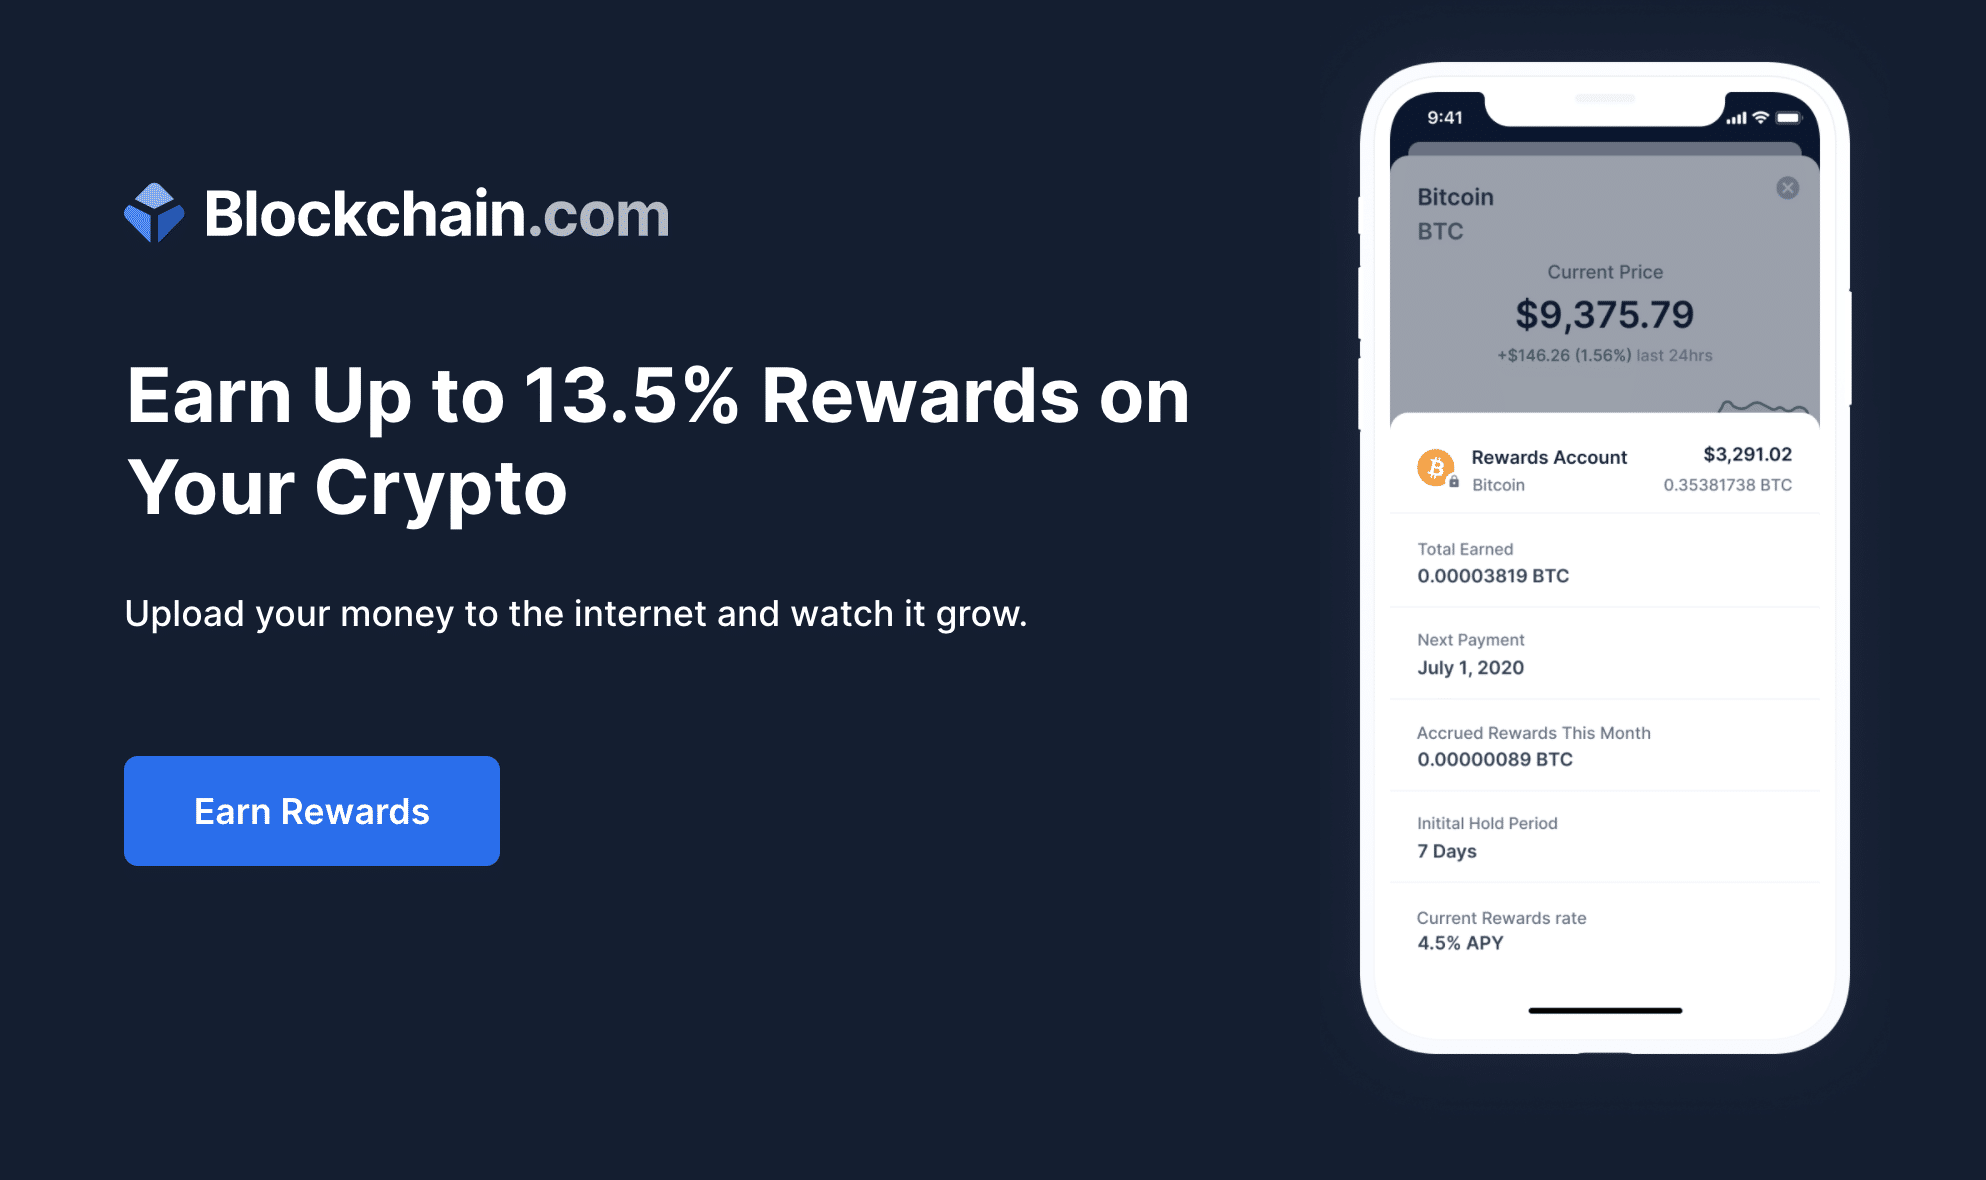 Blockchain.com rewards account